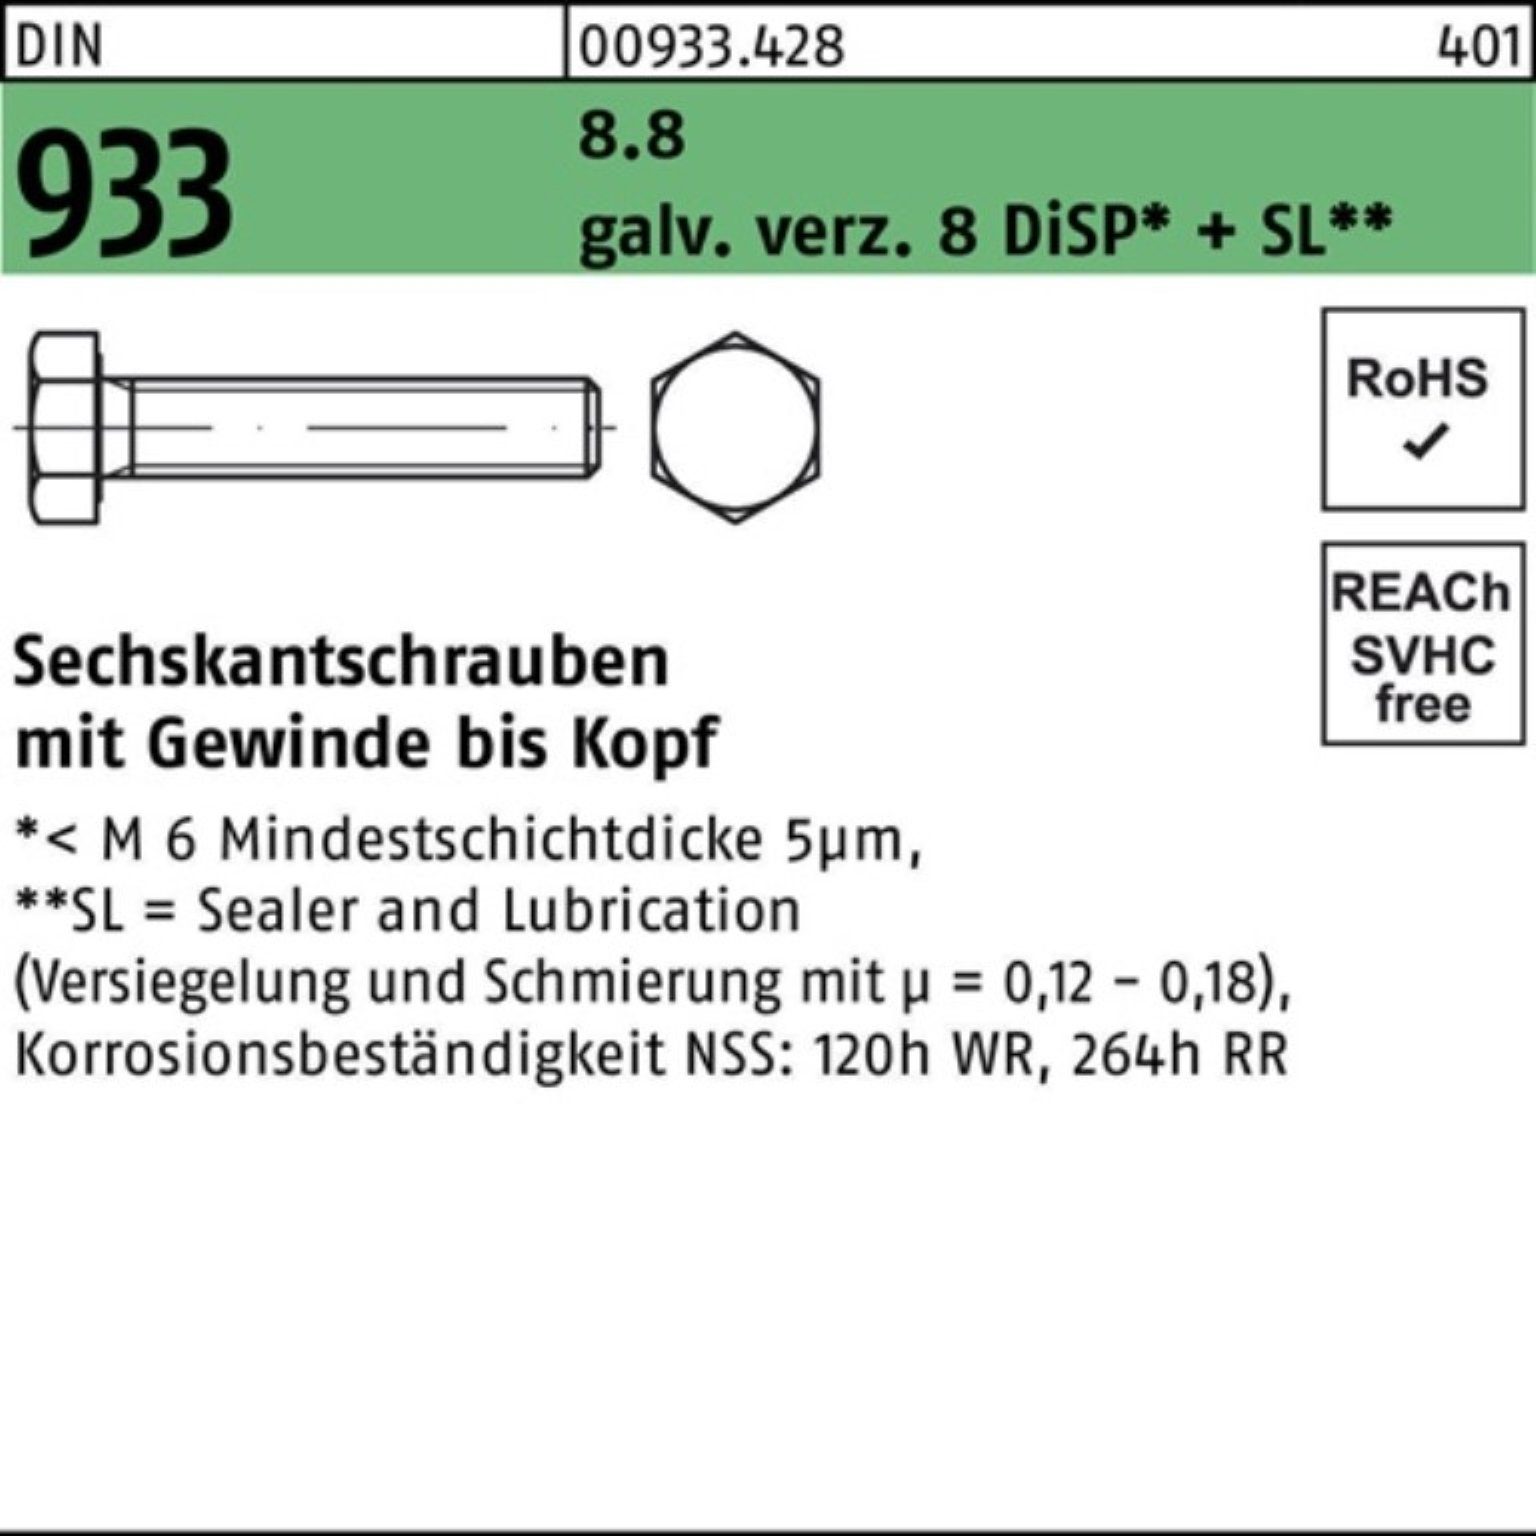 Reyher Sechskantschraube 100er Pack Sechskantschraube DIN 933 VG M20x 55 8.8 gal Zn 8 DiSP + SL